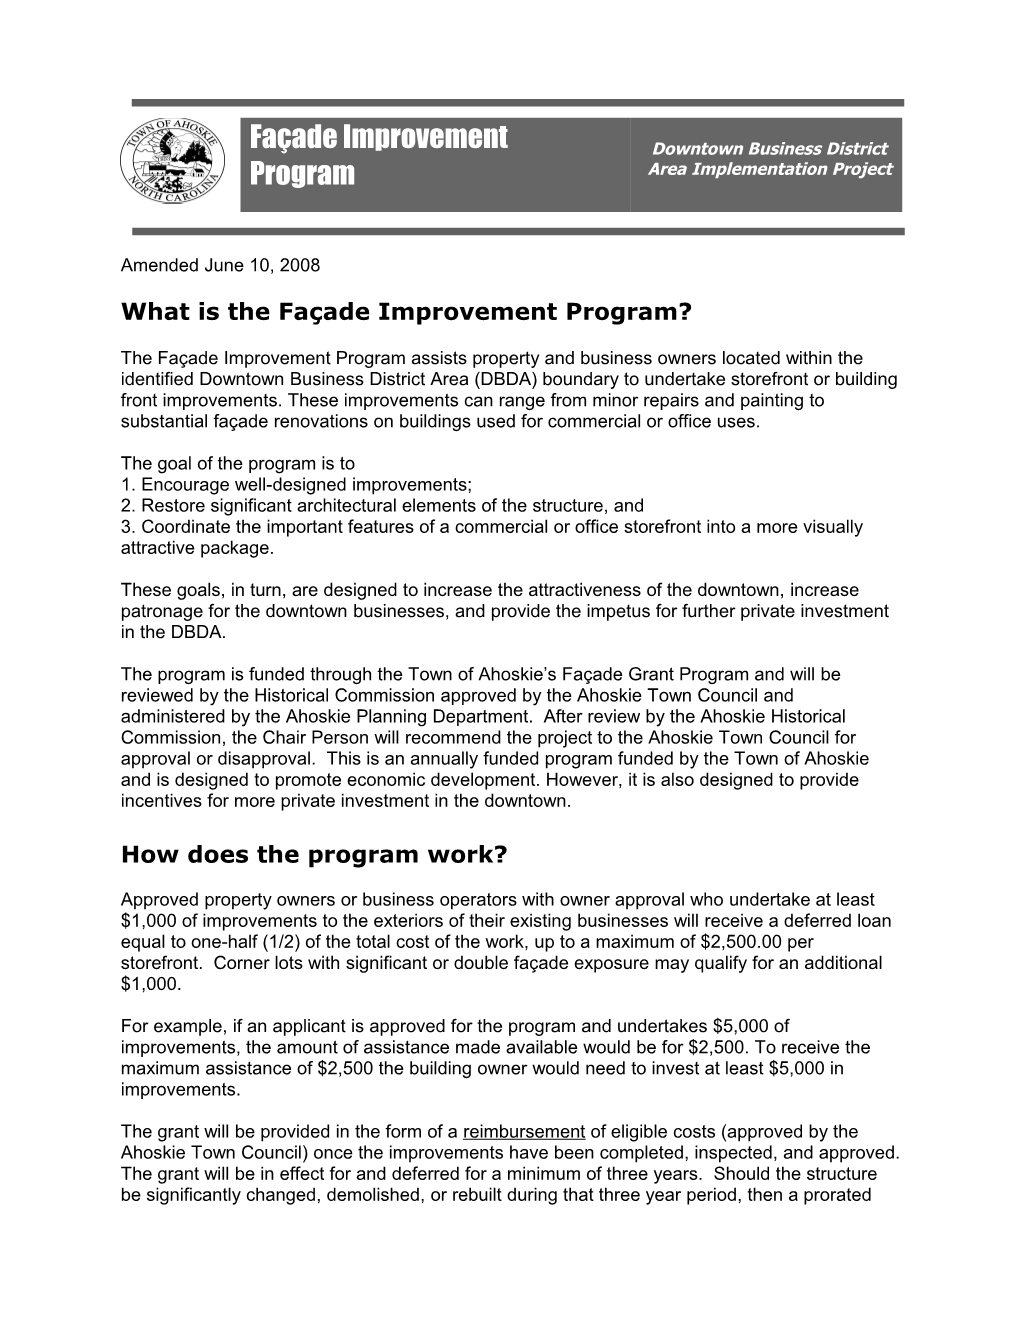 What Is the Façade Improvement Program?